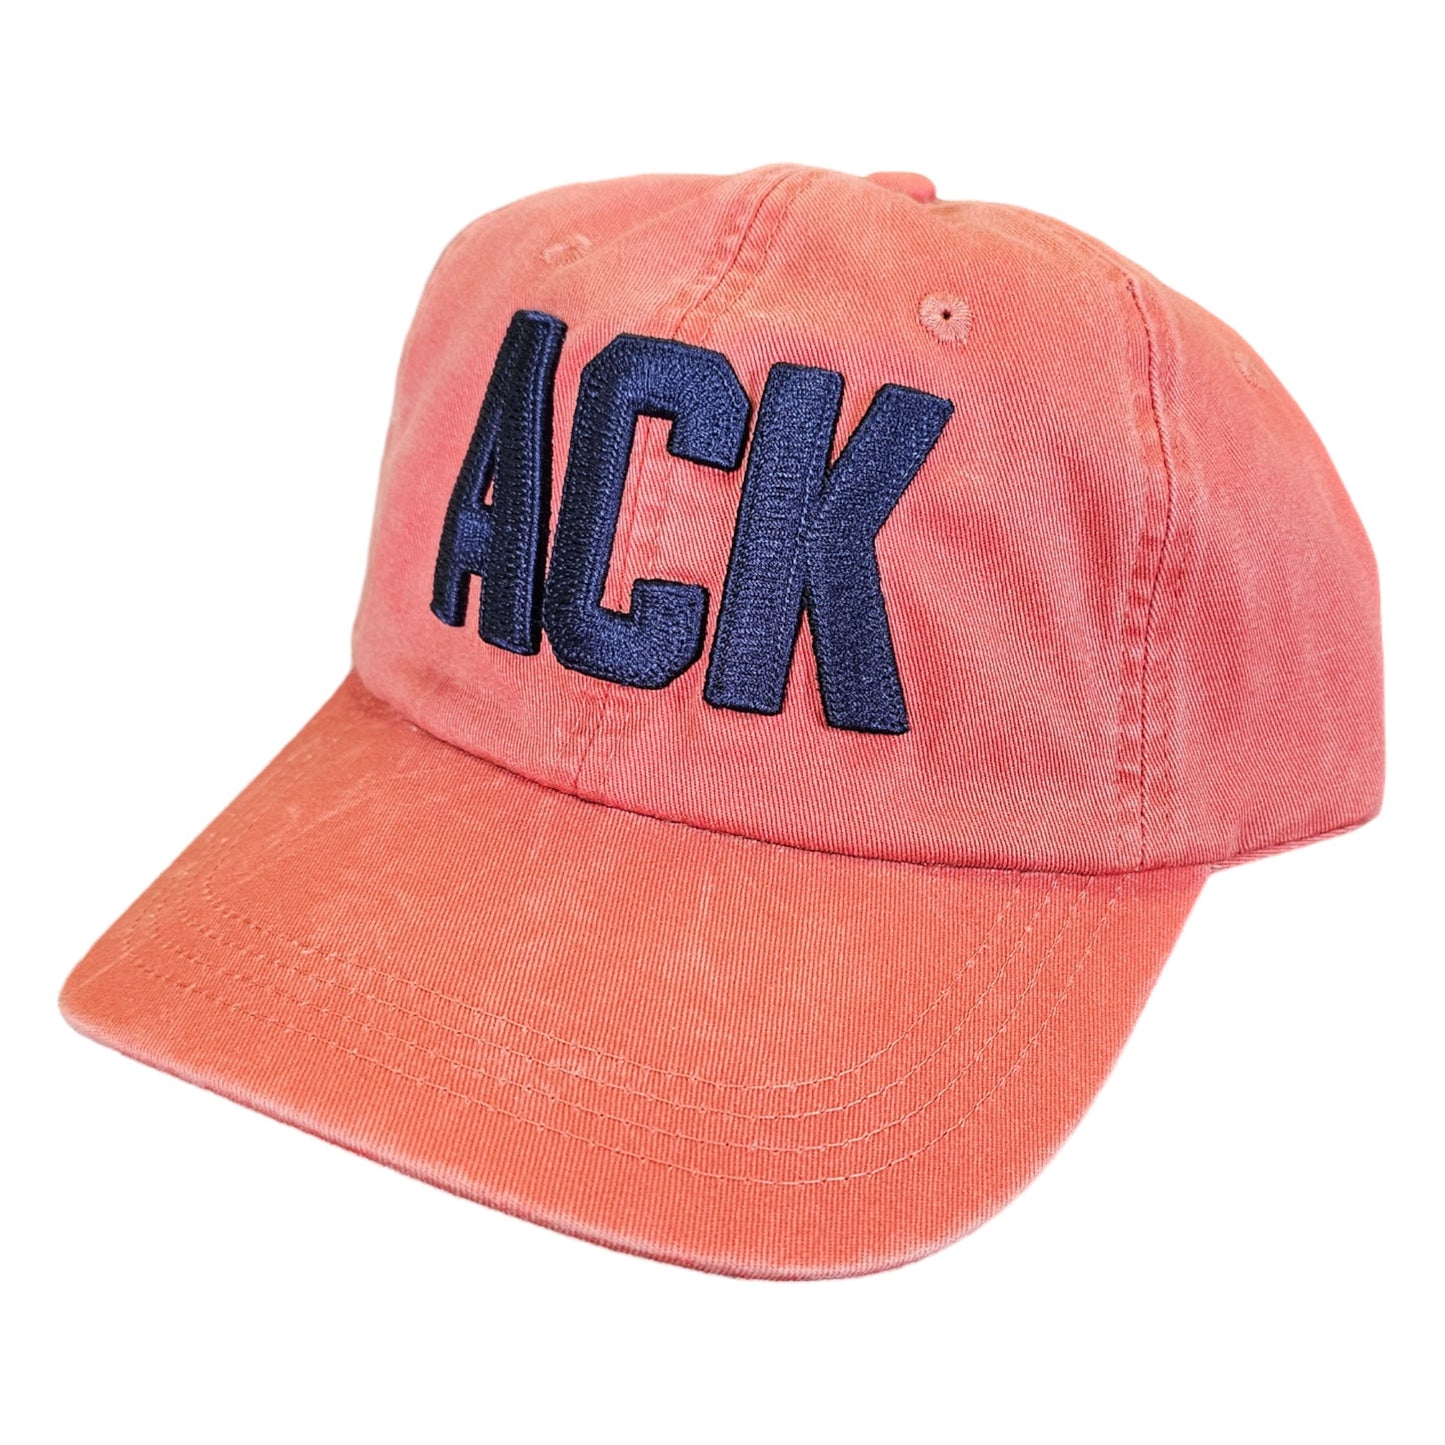 ACK Chainstitch Pigment Hat